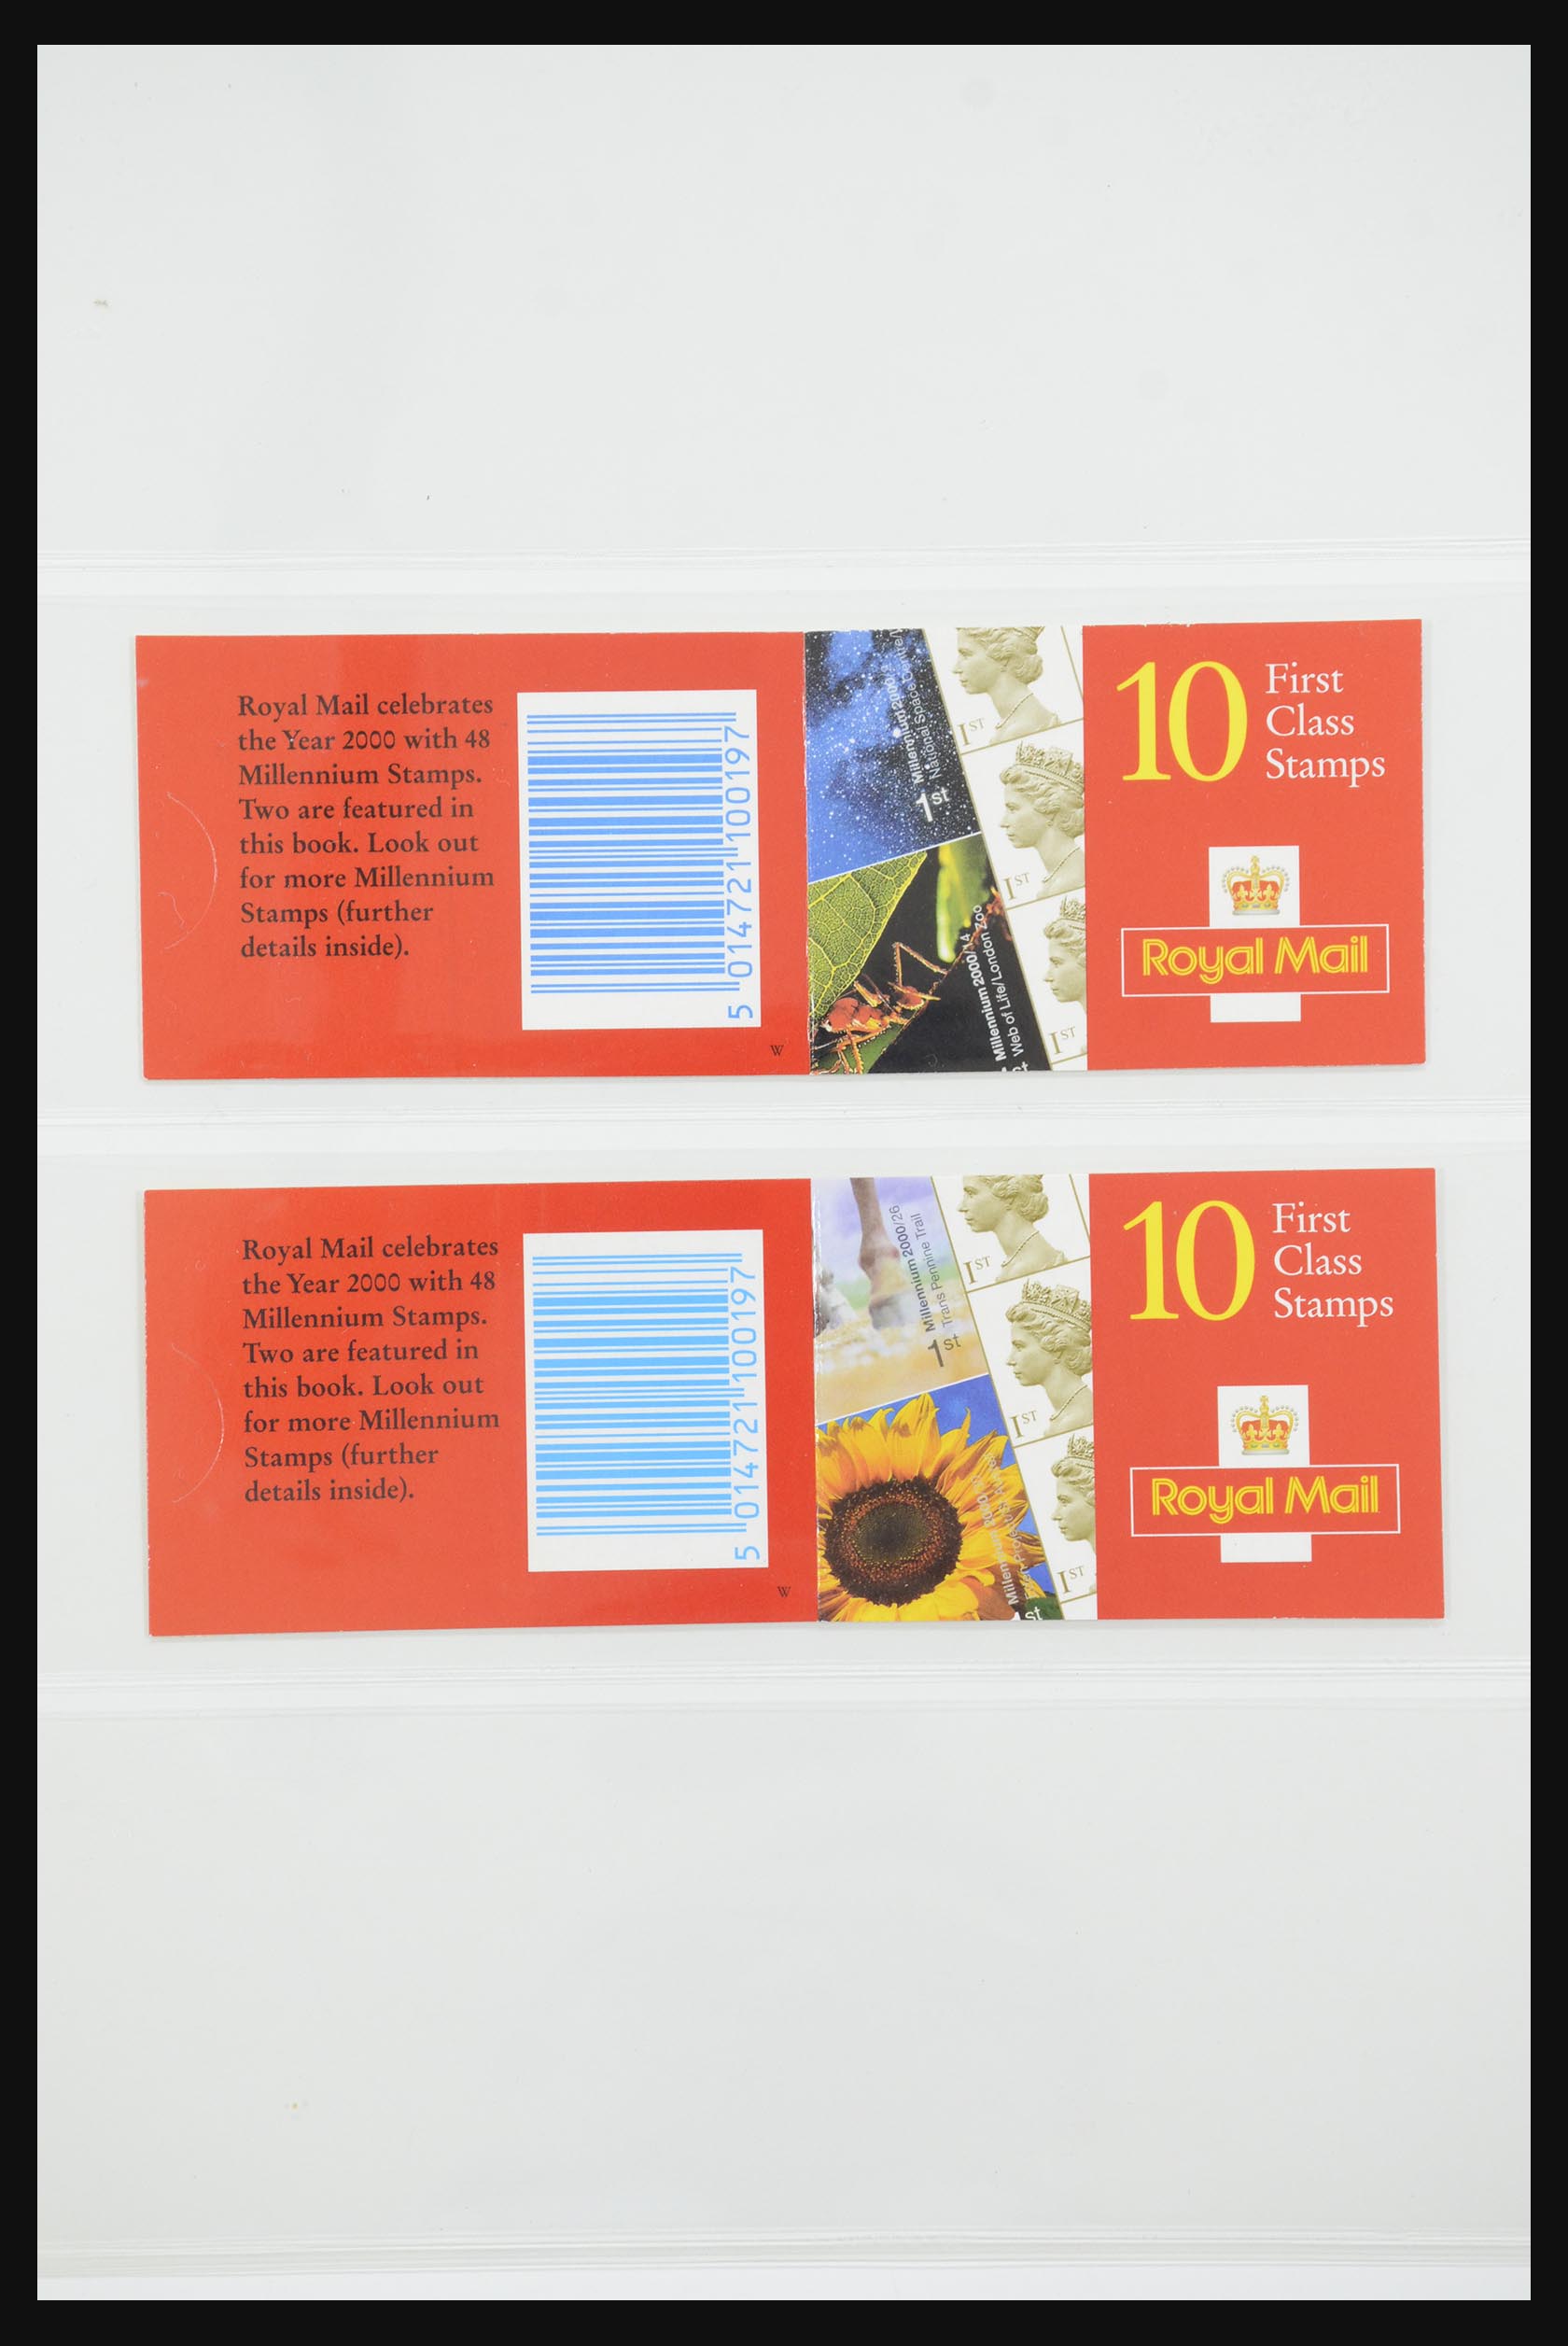 31960 055 - 31960 Great Britain stampbooklets 1989-2000.